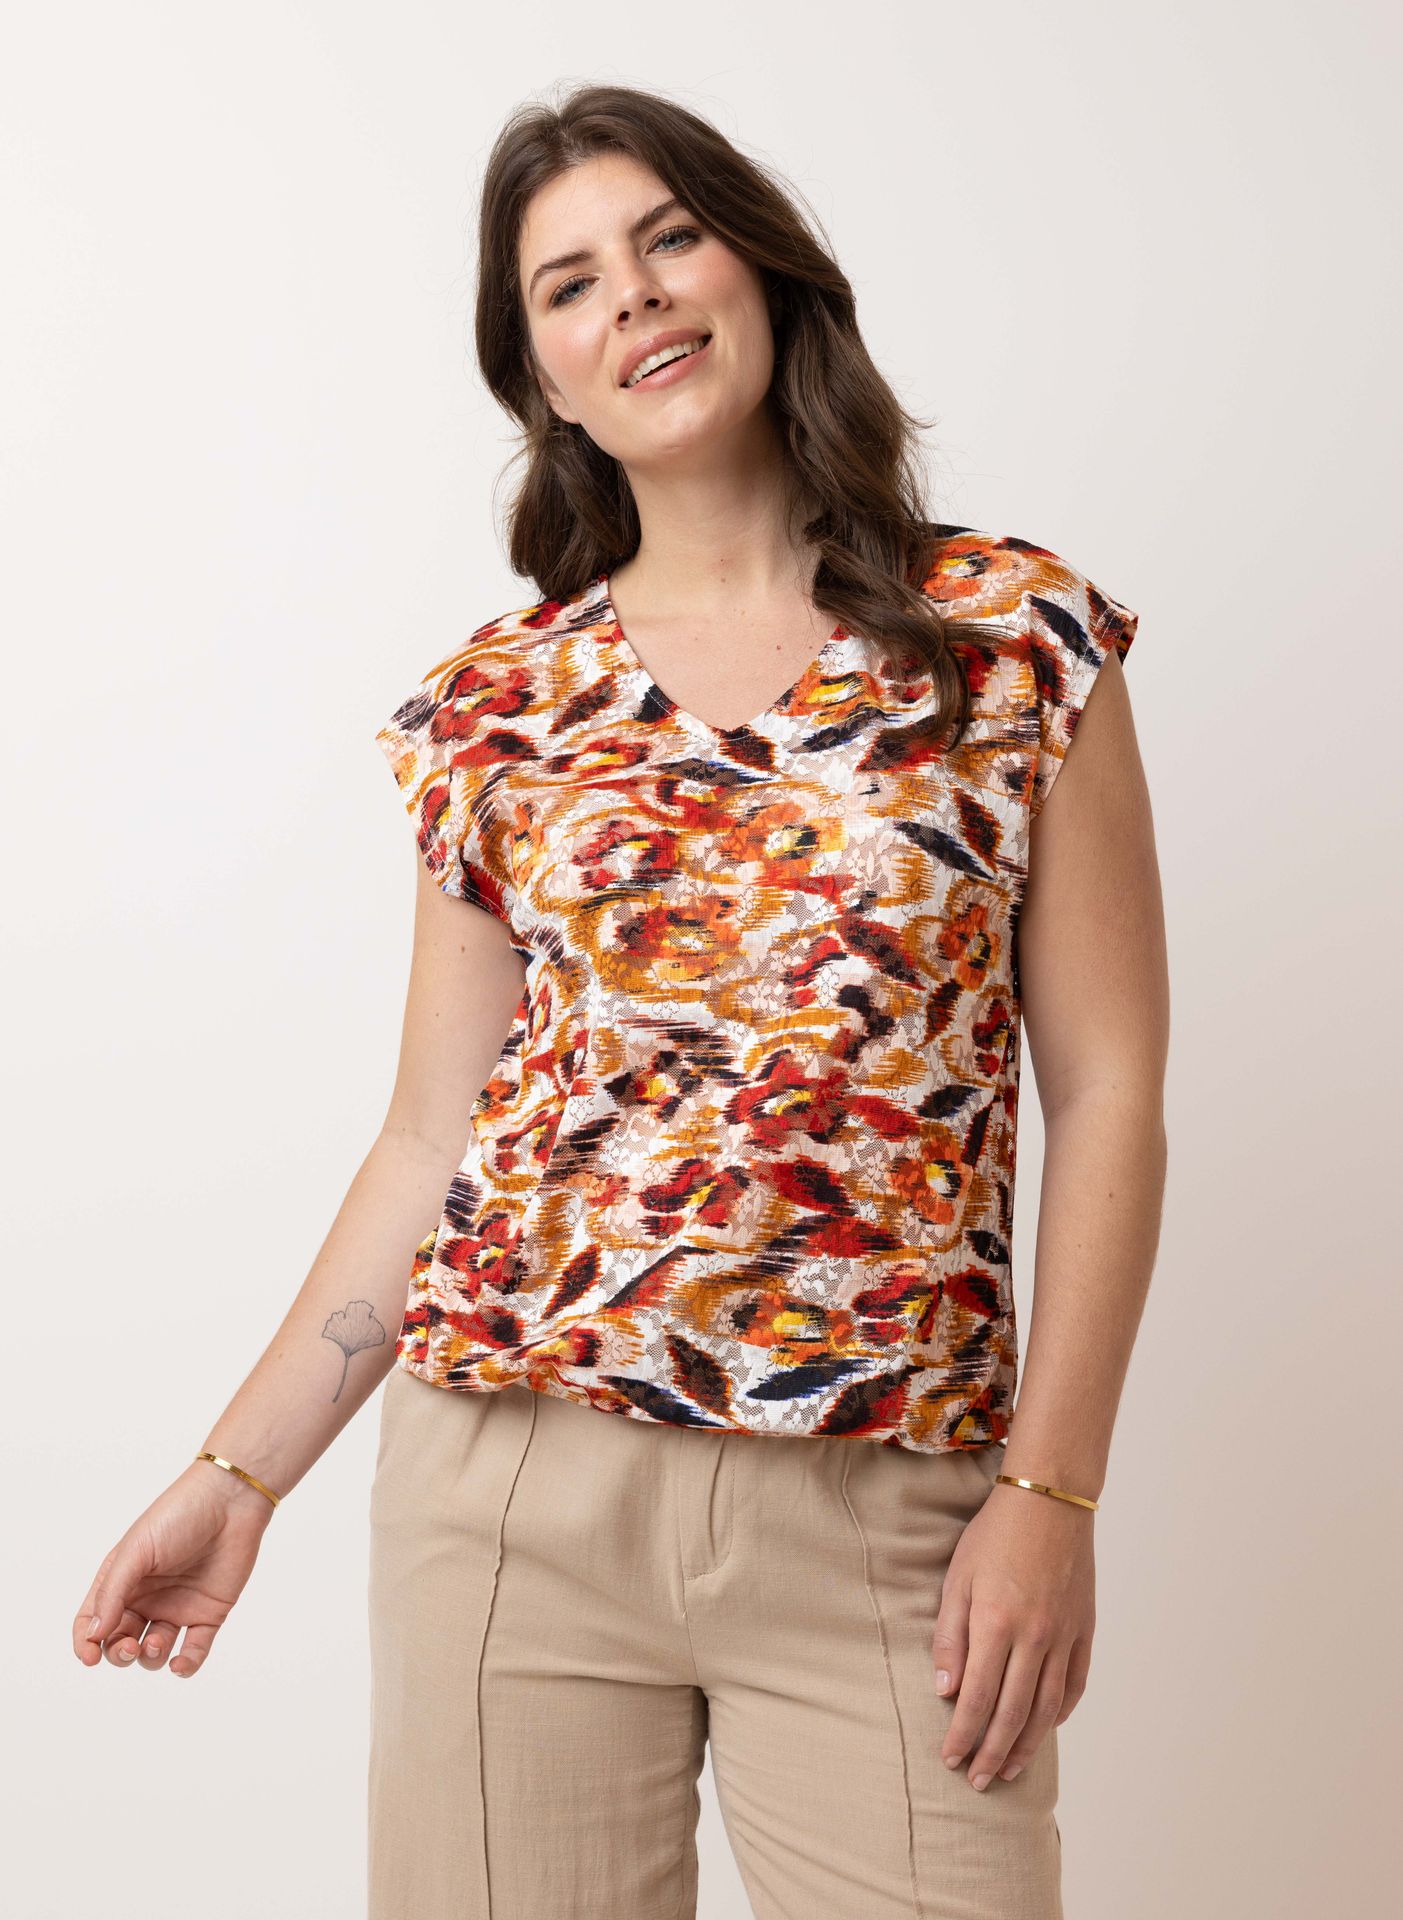 Norah Kanten shirt orange multicolor 213804-720